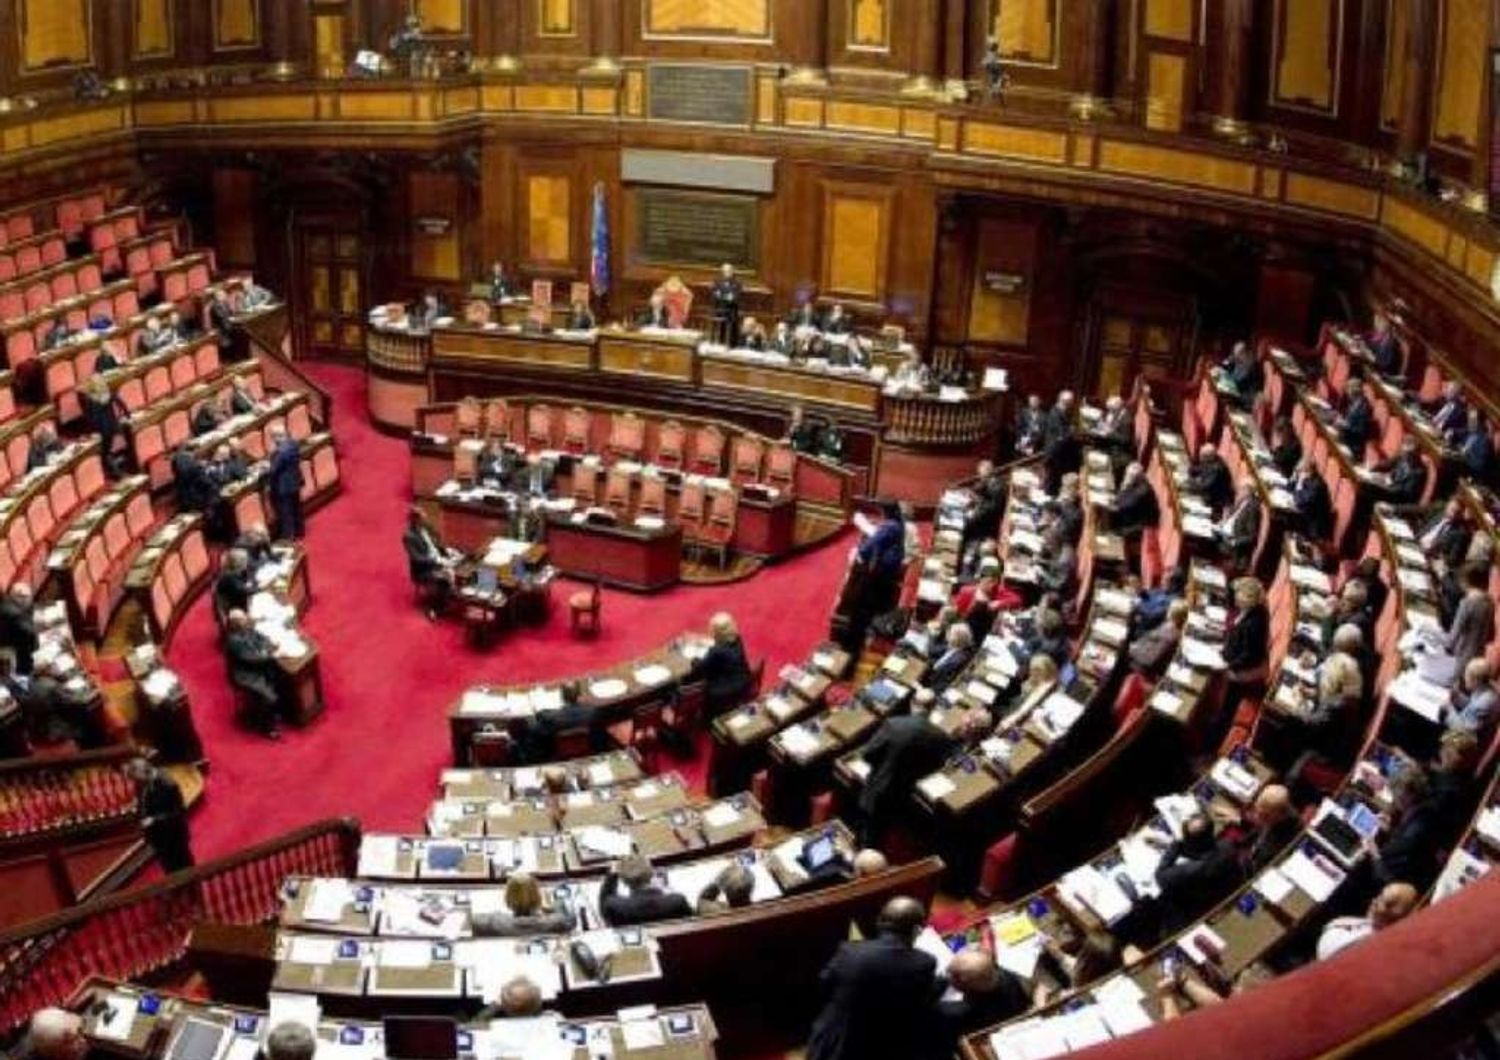 Senate reform speeches to take 30 hours